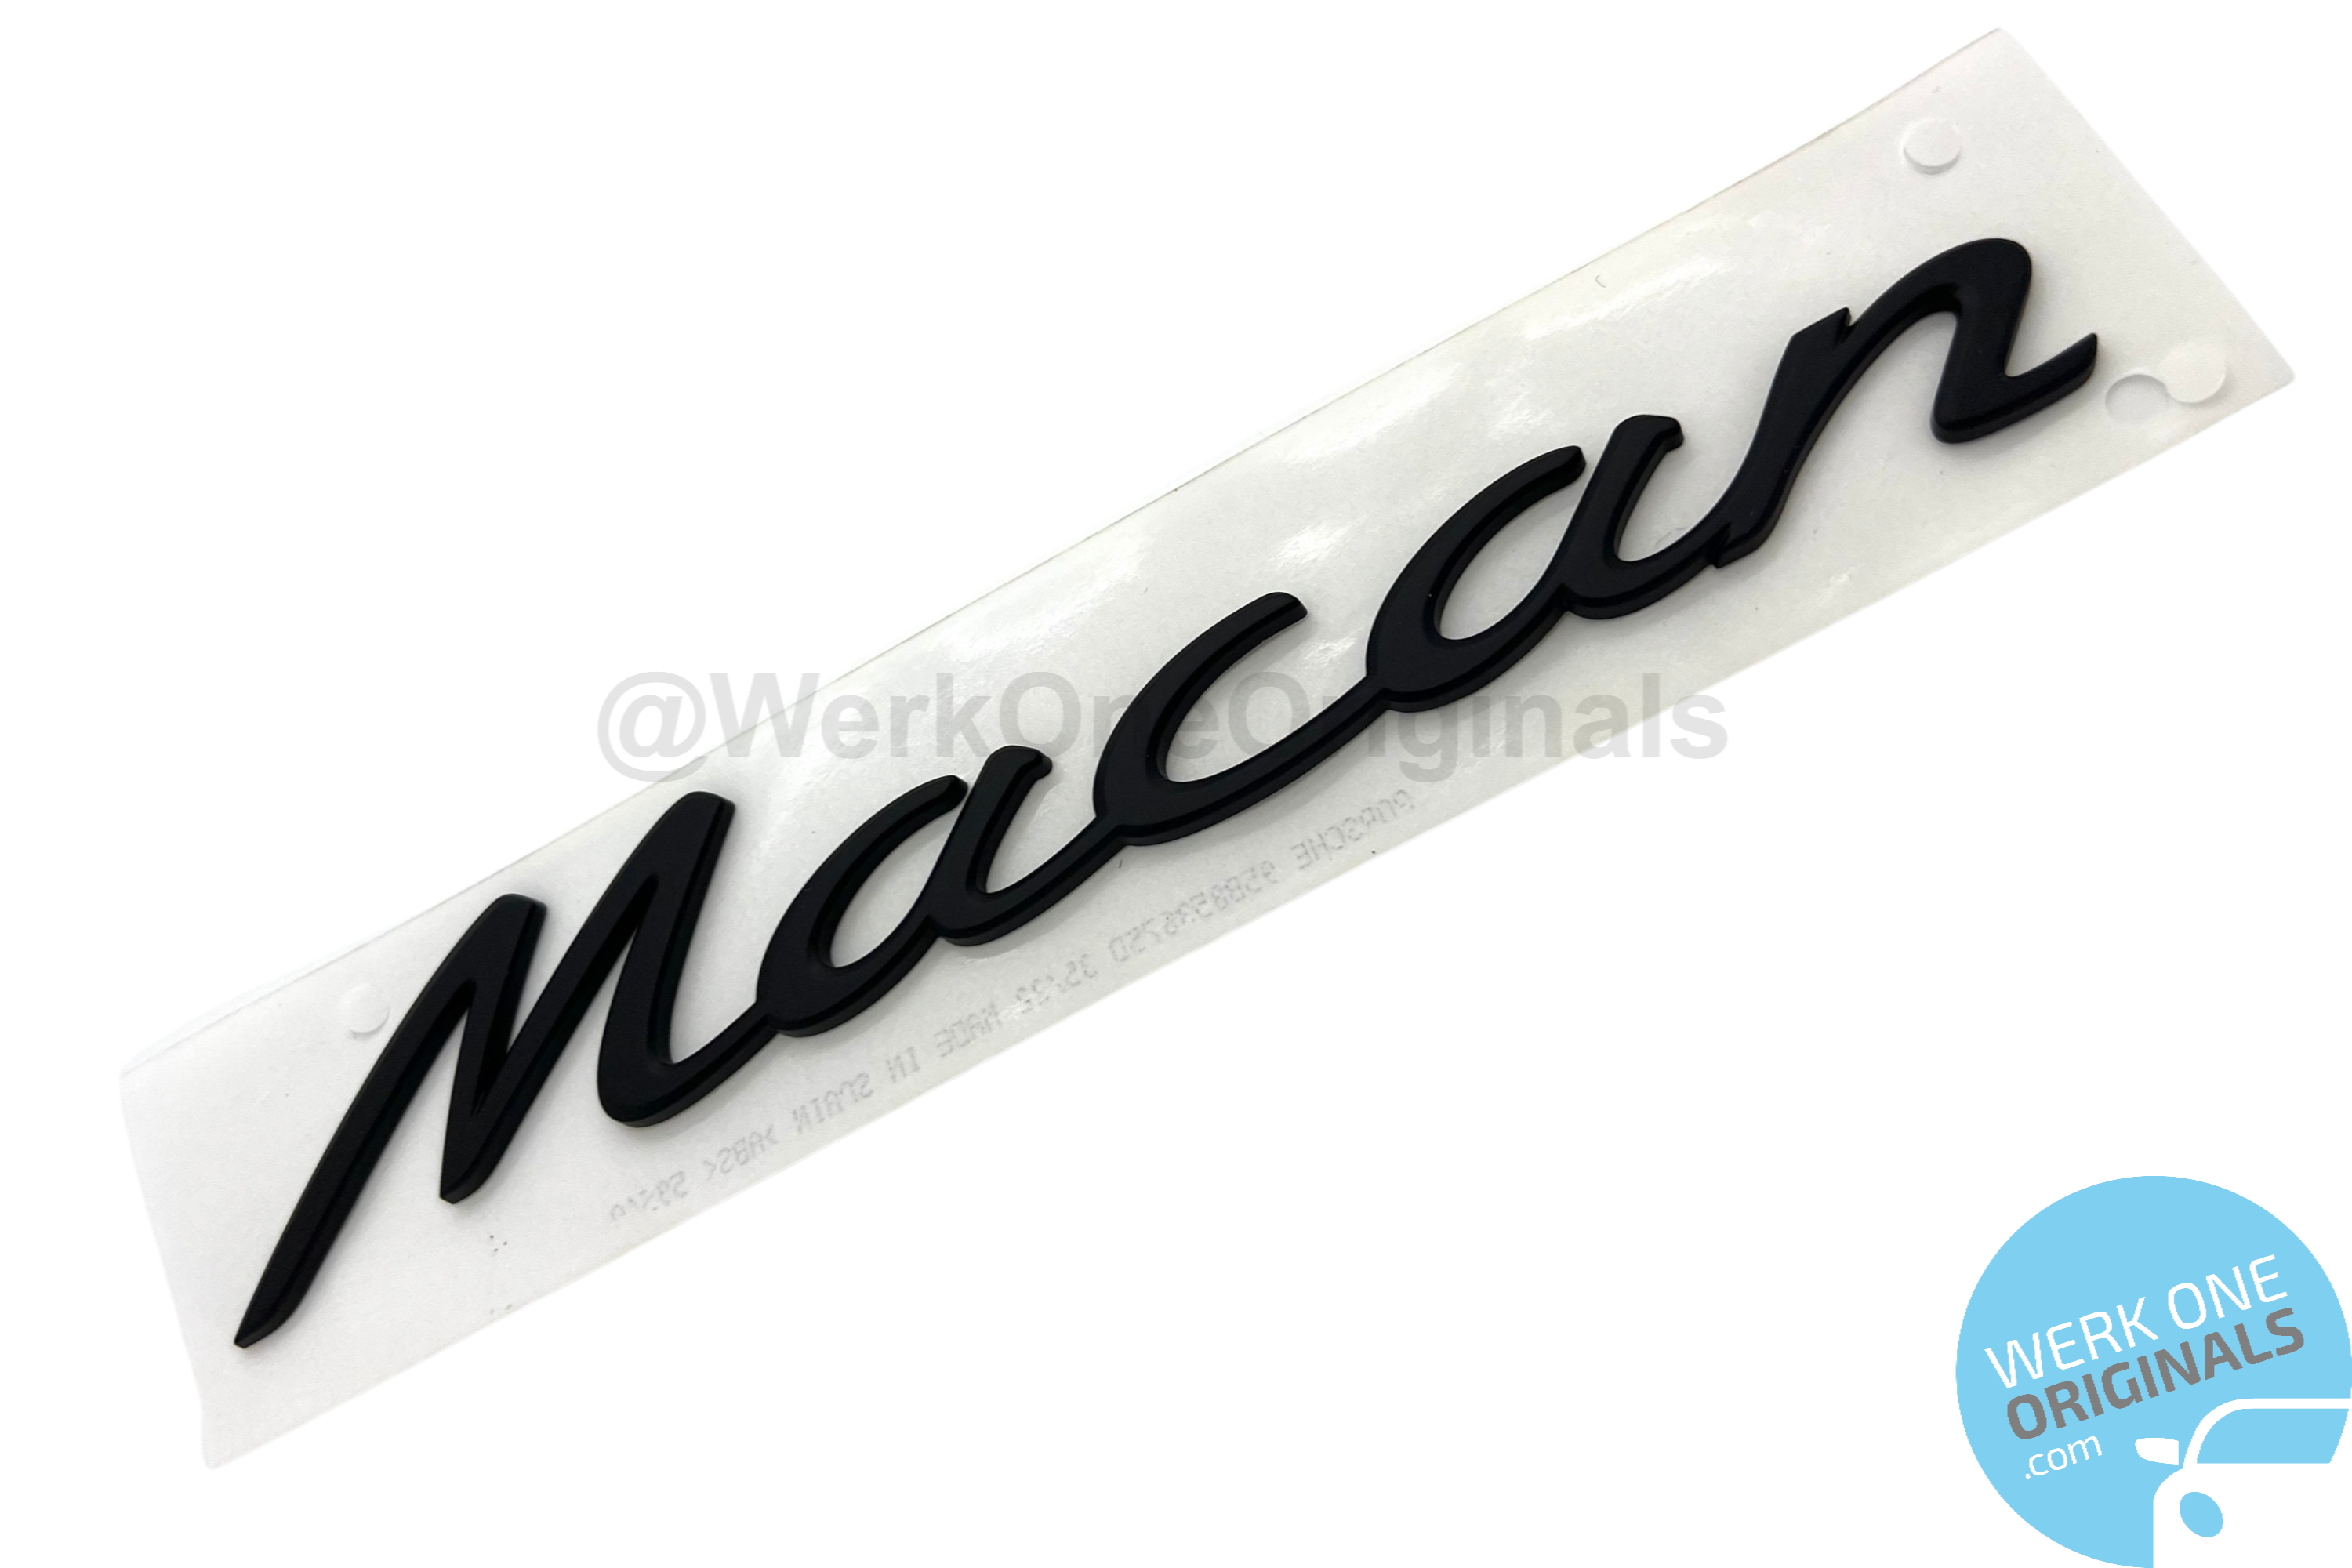 Official 'Porsche Macan S' Rear Badge Logo in Matte Black for Macan S Type 95B Models (2014 - 2018)